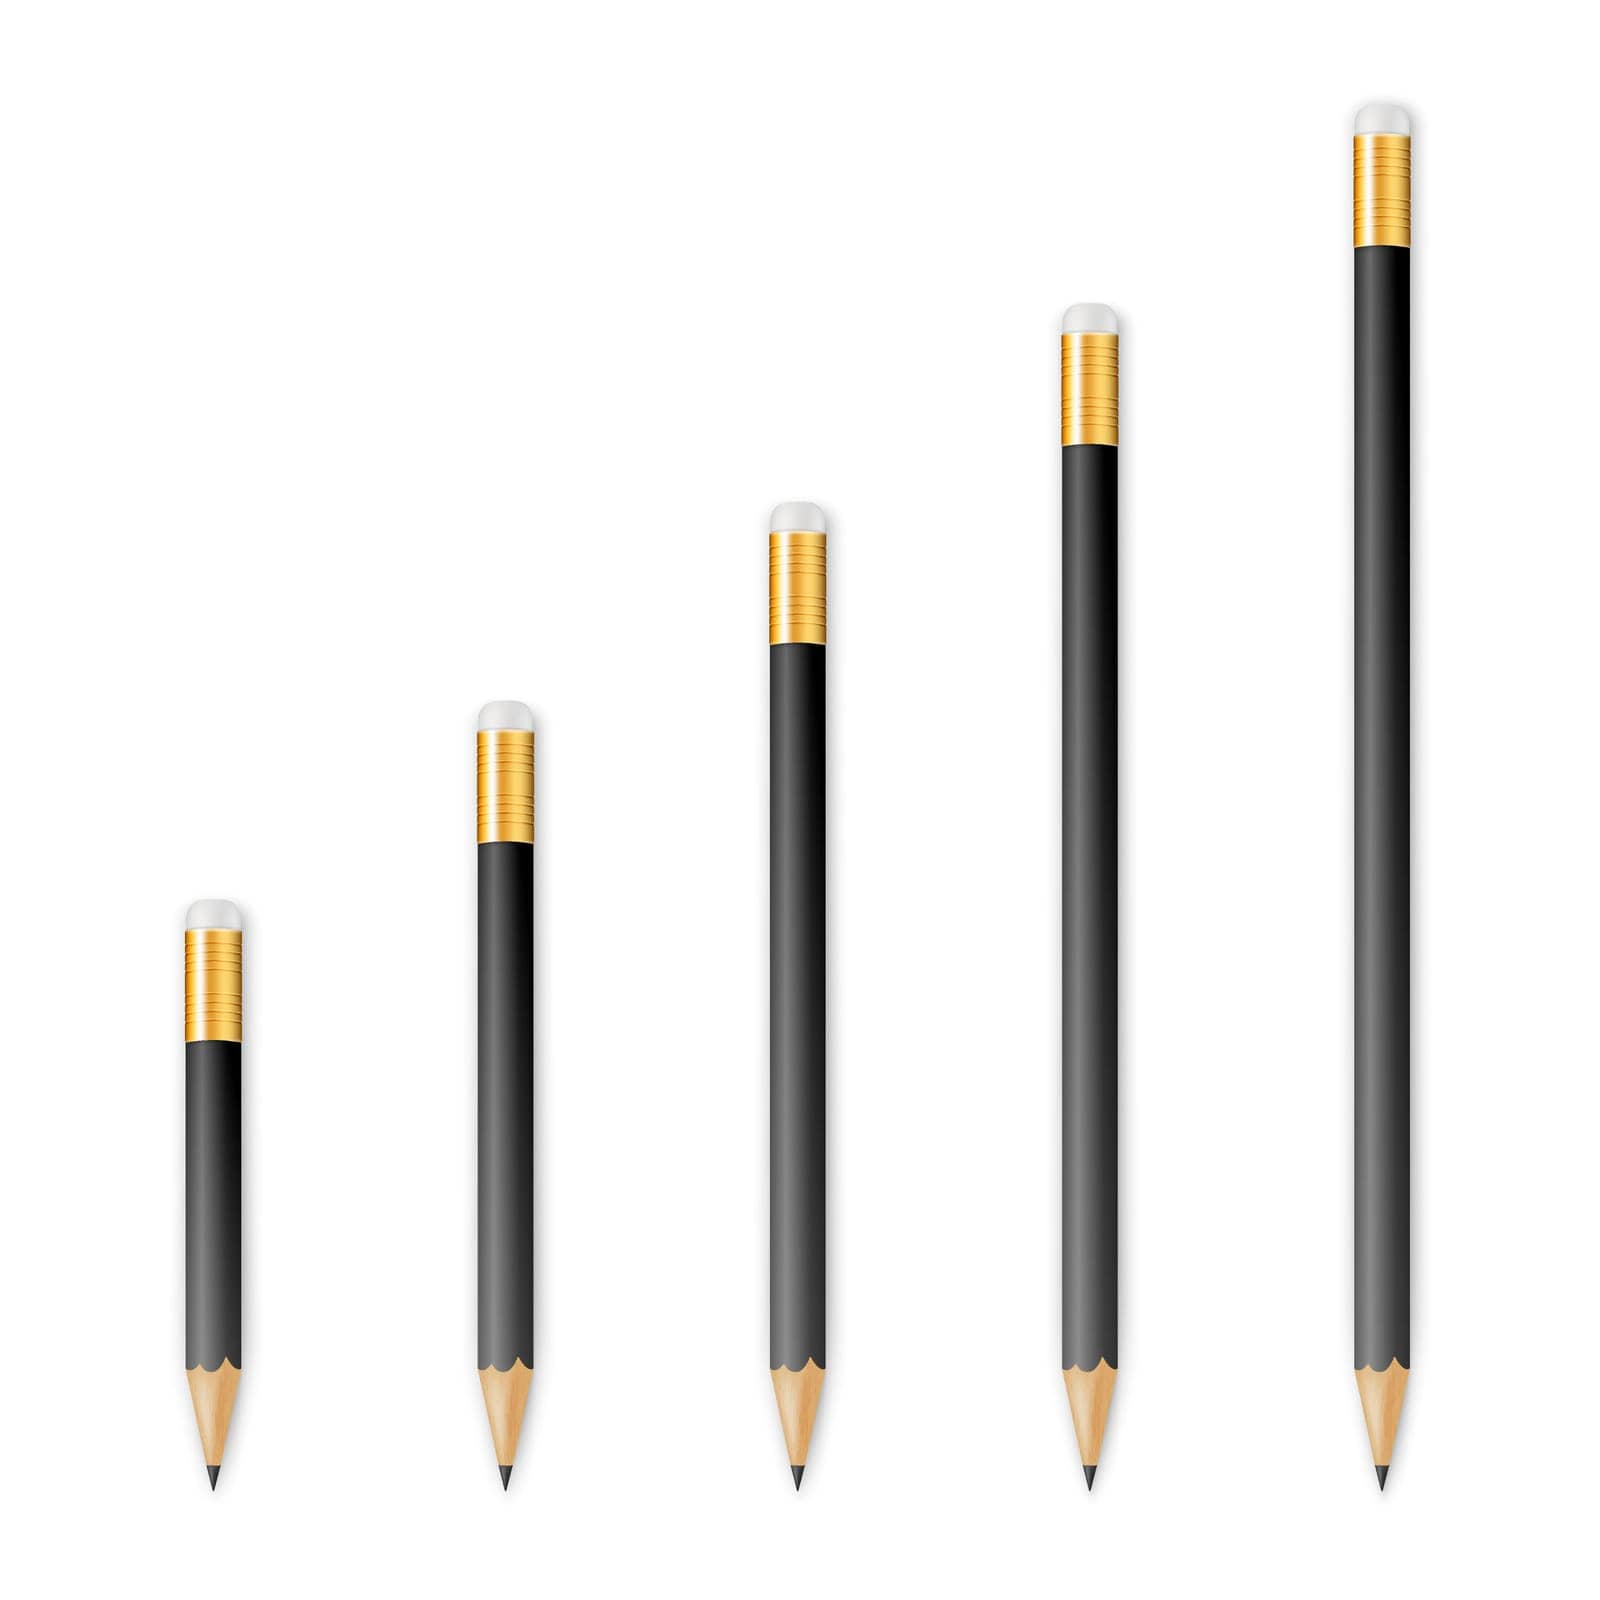 Black wooden sharp pencils by Gomolach